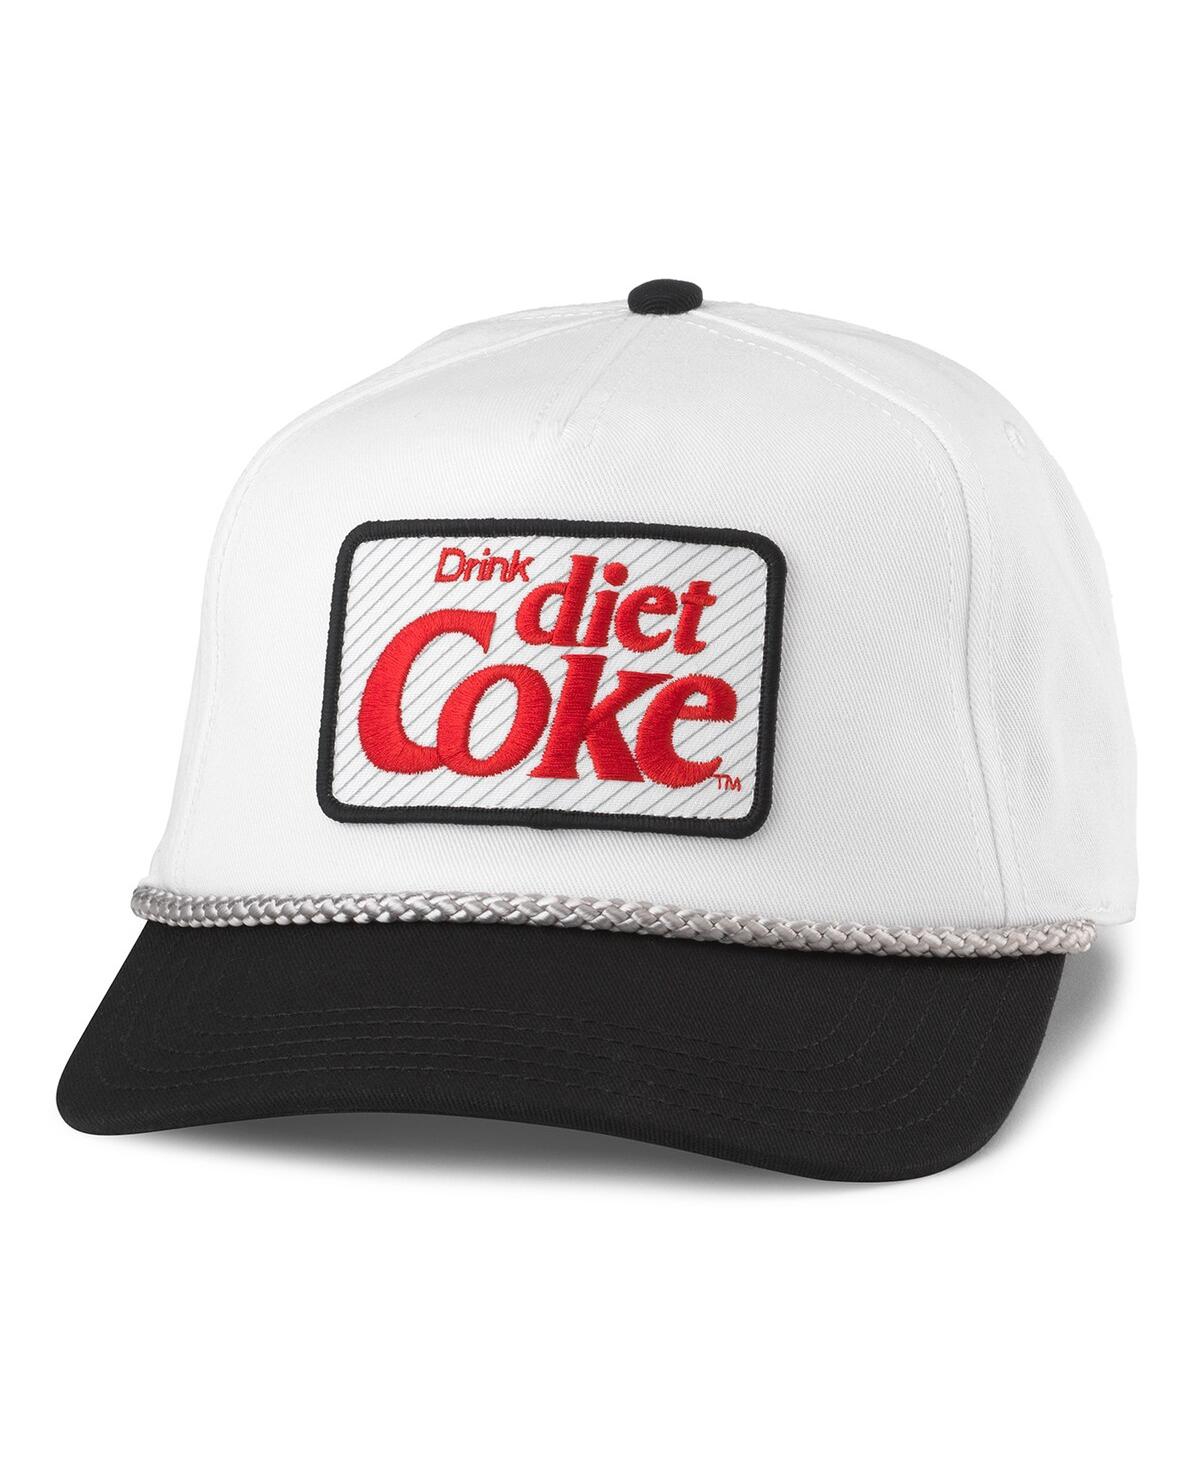 Men's and Women's American Needle Silver, Black Diet Coke Roscoe Adjustable Hat - Silver, Black